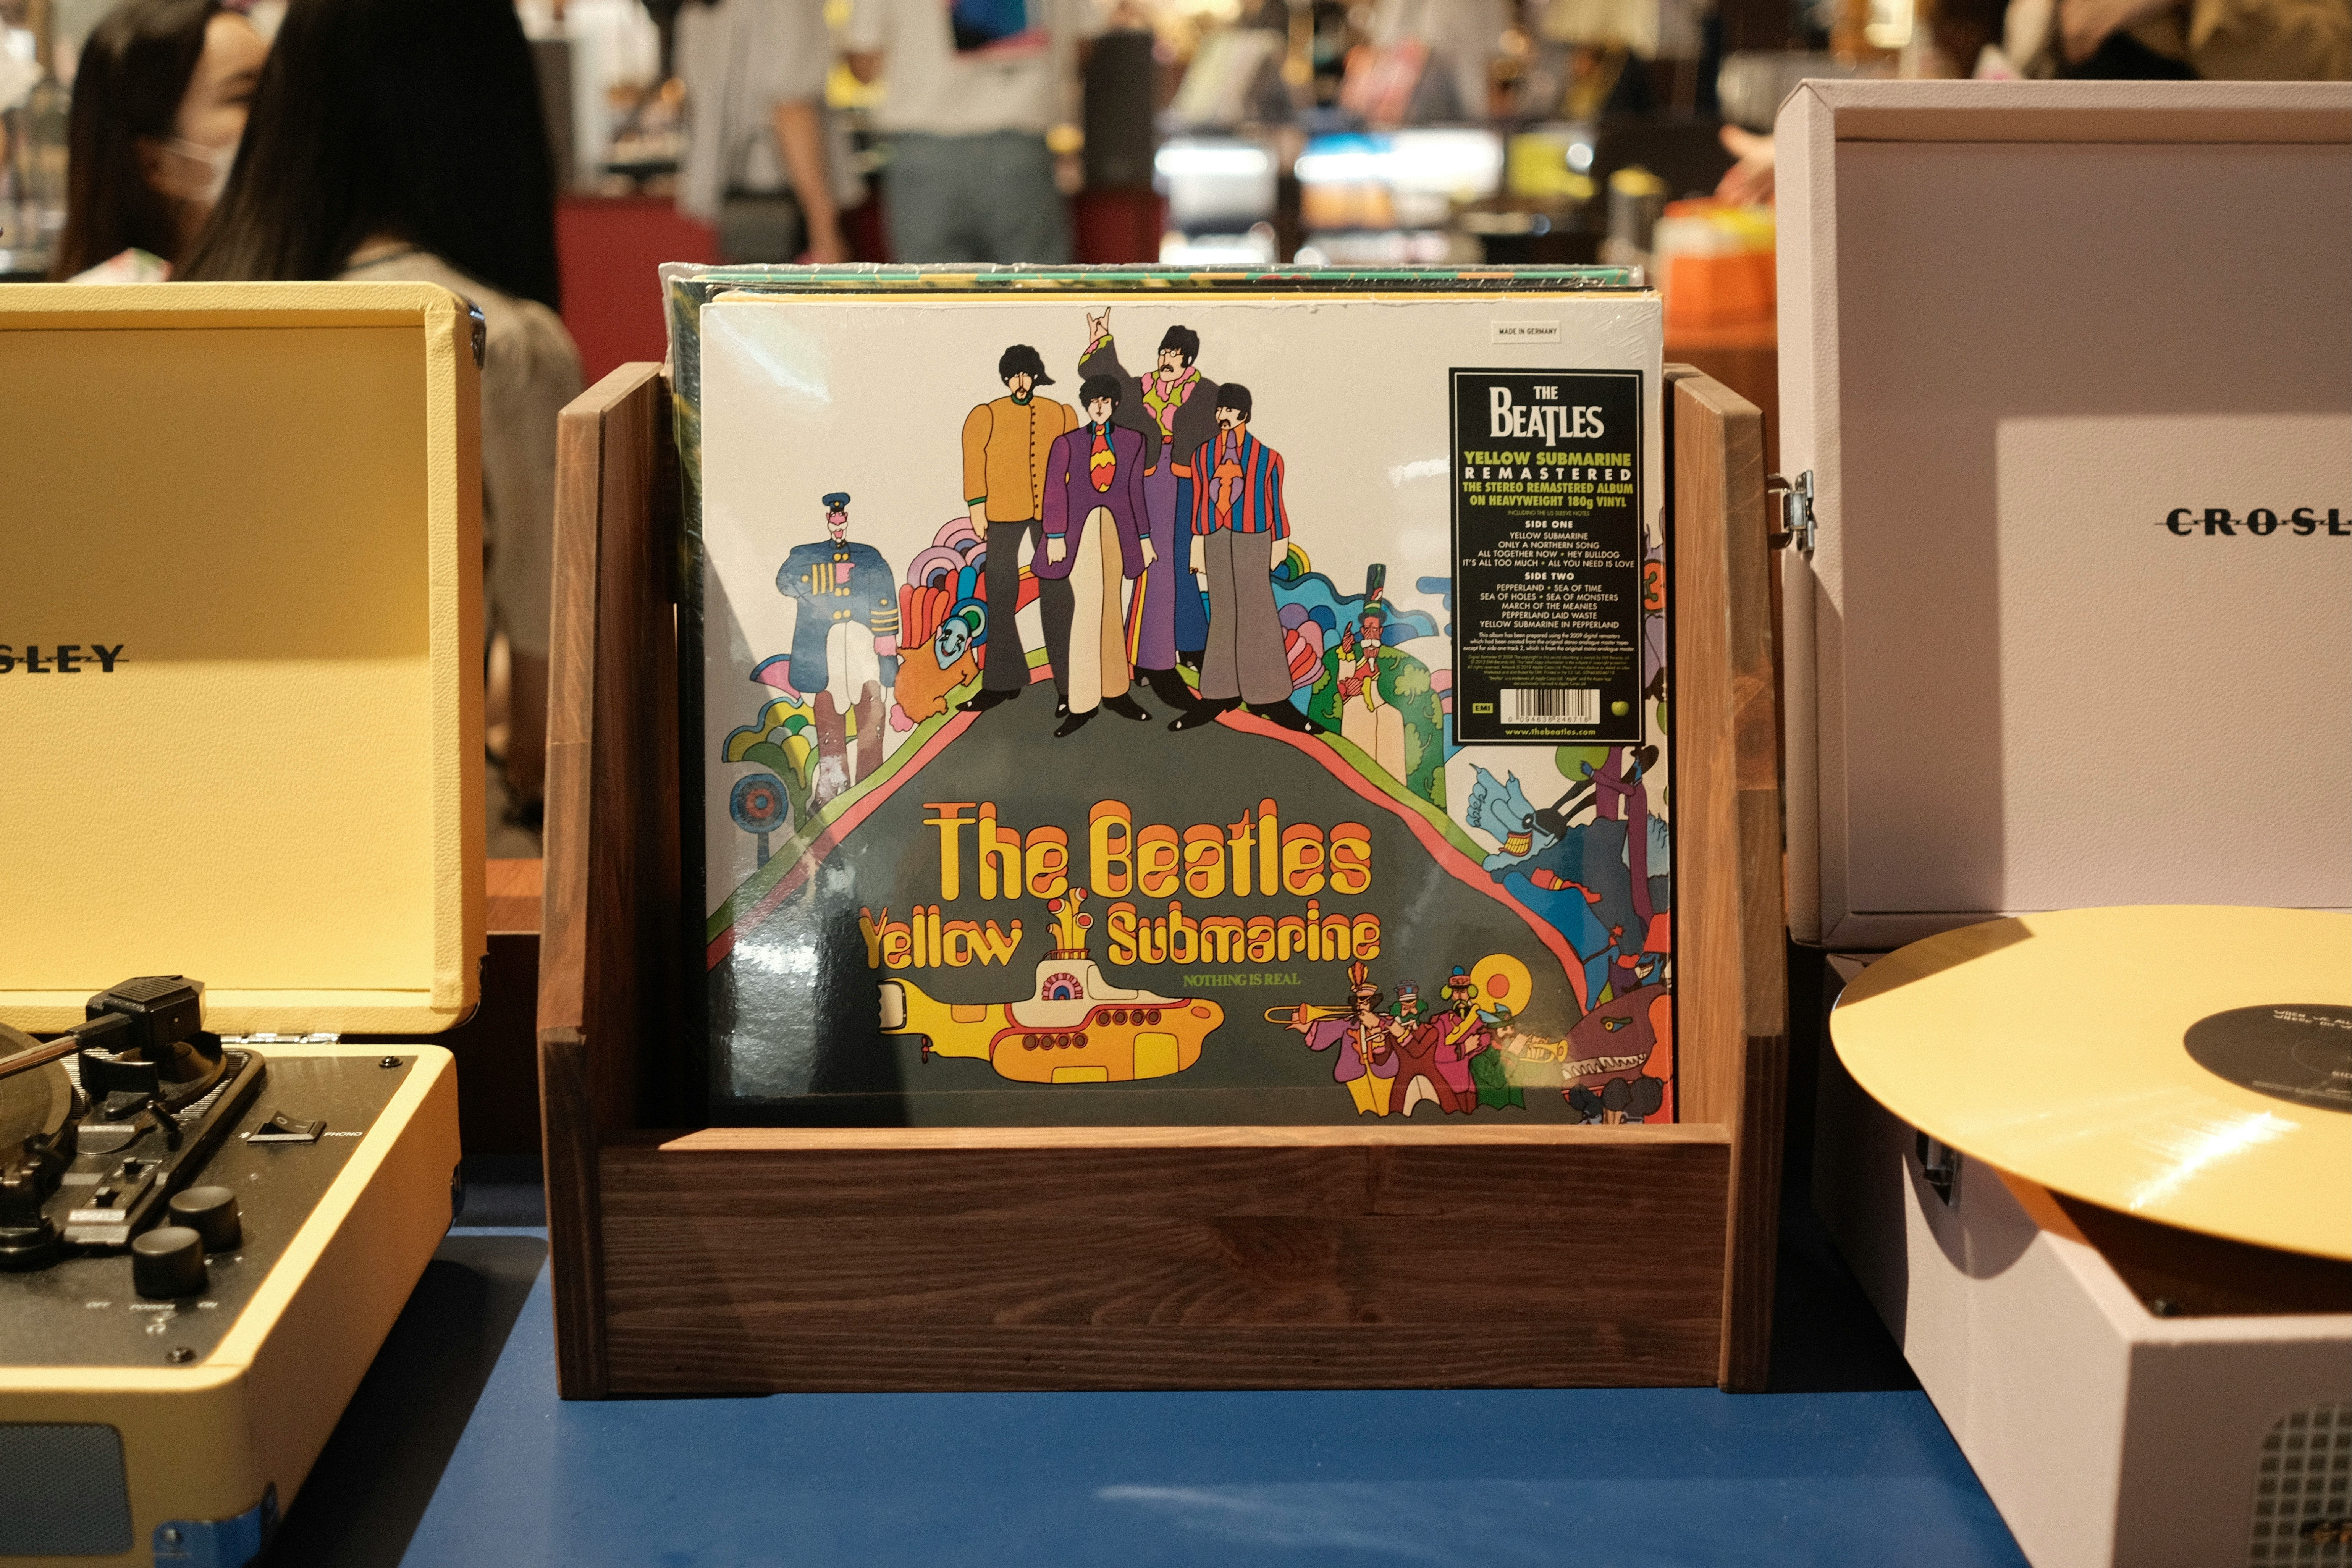 The Beatles Yellow Submarine vinyl